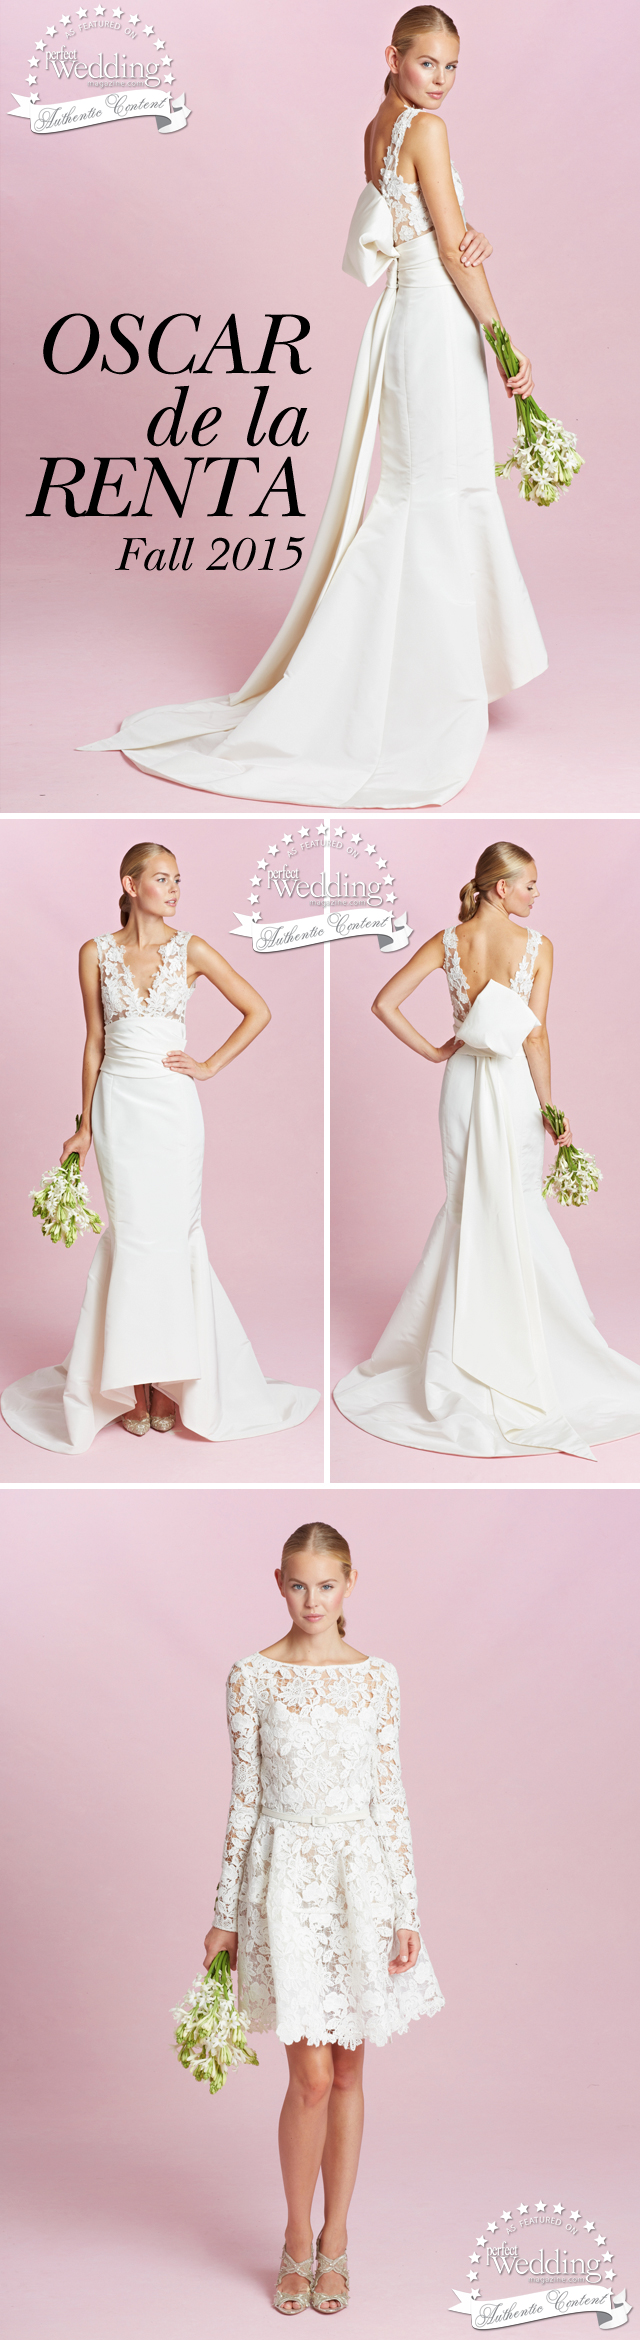 Oscar de la Renta, Oscar de la Renta Fall 2015 Bridal Collection, Fall Bridal Trends, Perfect Wedding Magazine, Perfect Wedding Magazine Blog